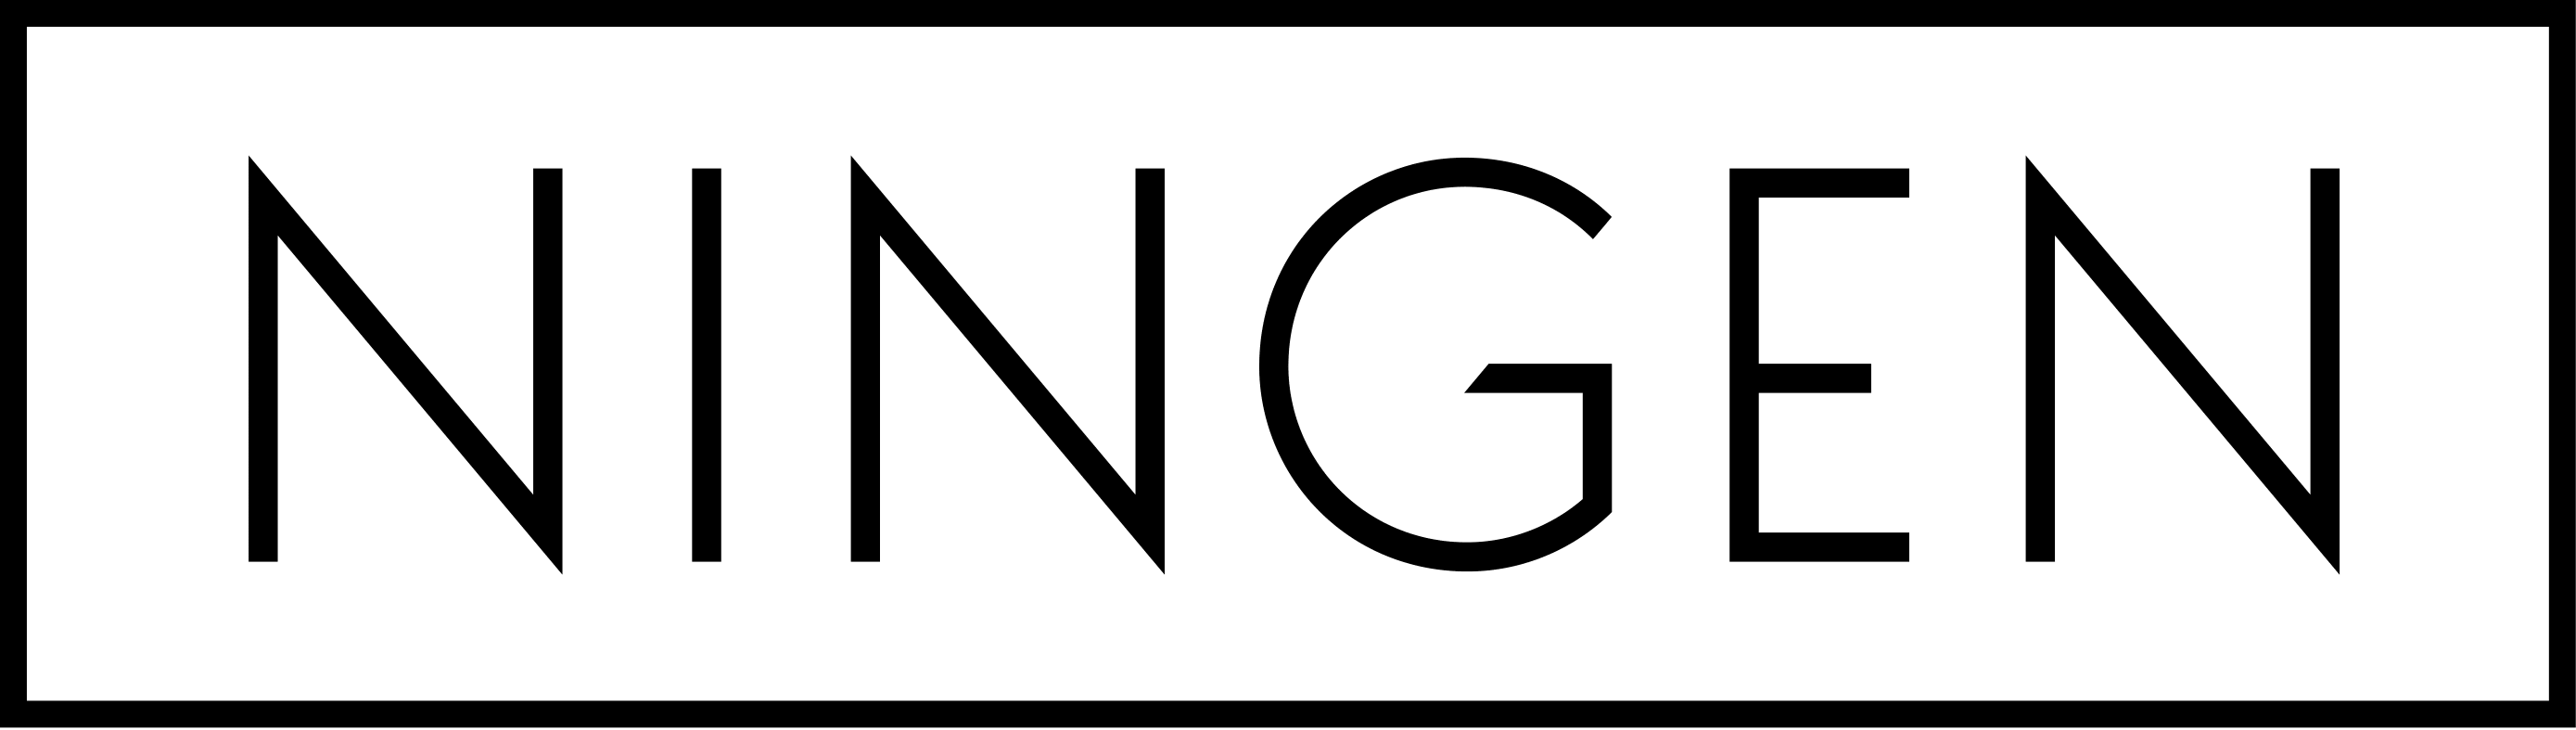 NINGEN Main symposium sponsor